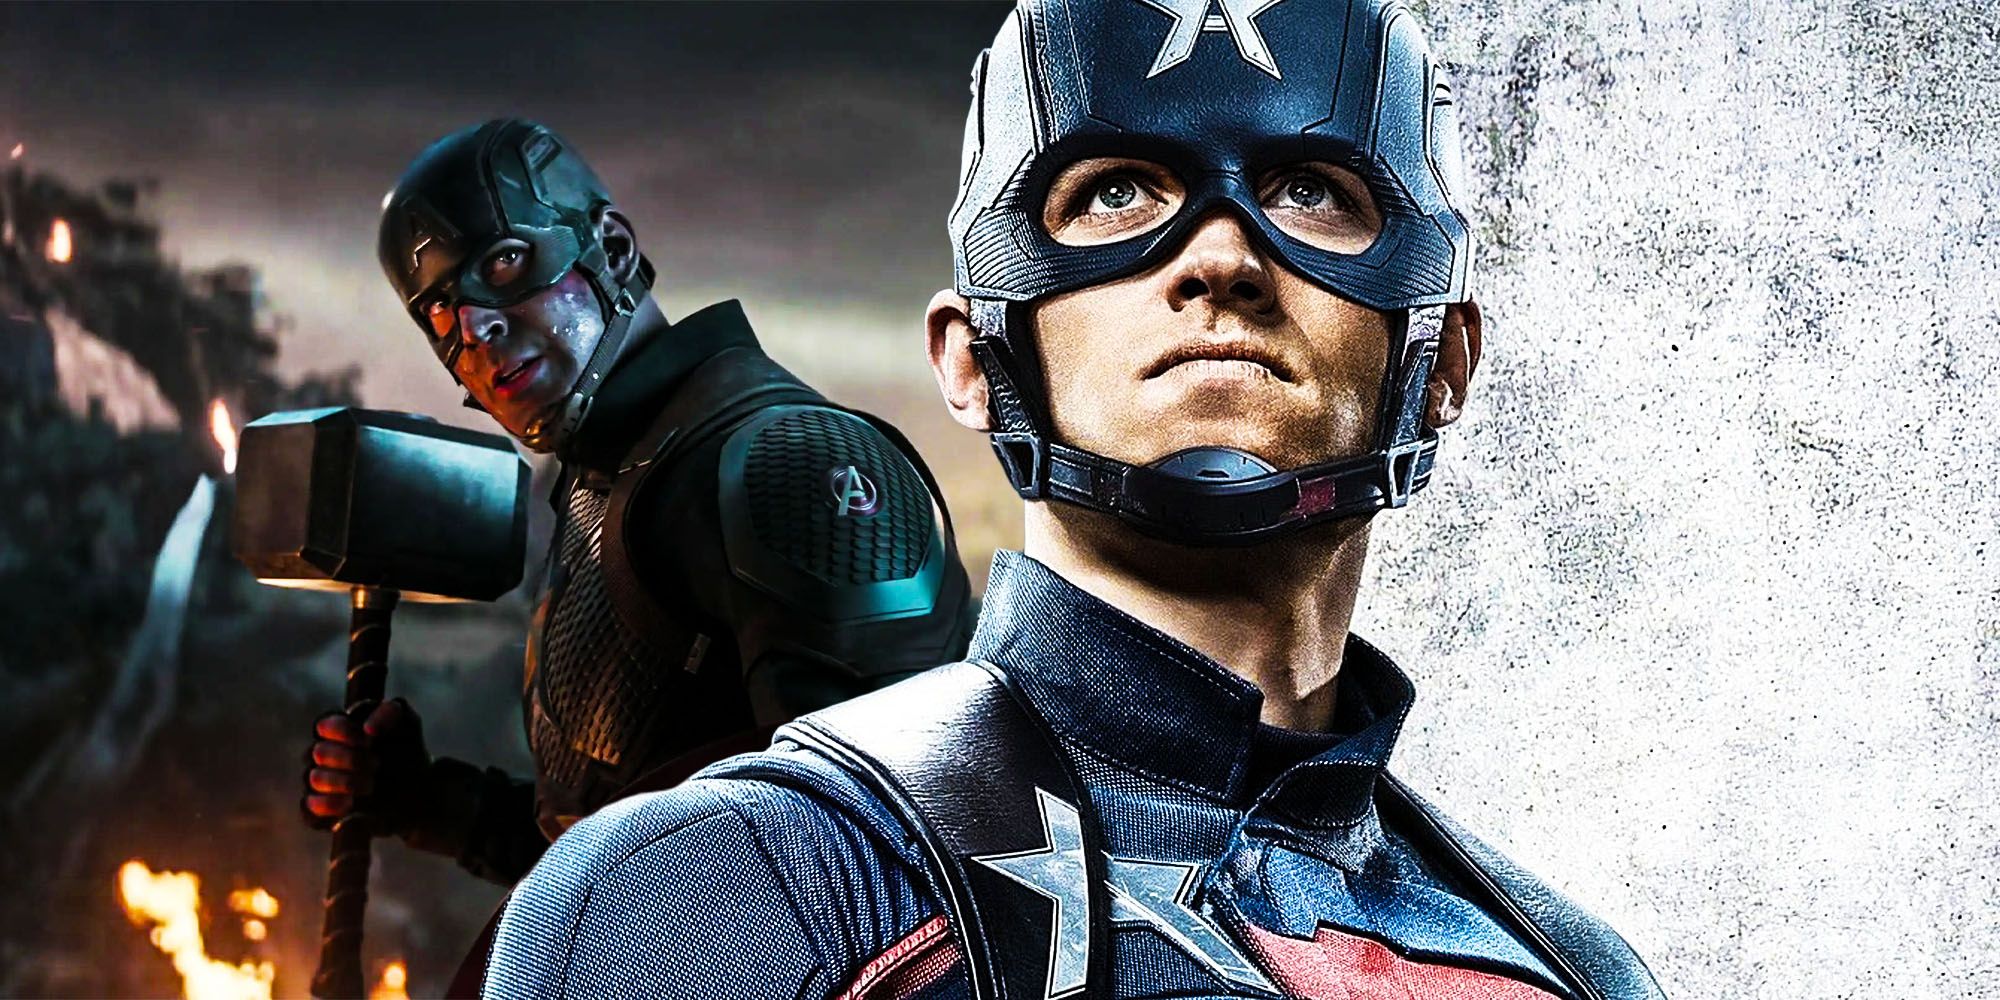 John Walker Captain America Steve Rogers wielding Mjolnir more special